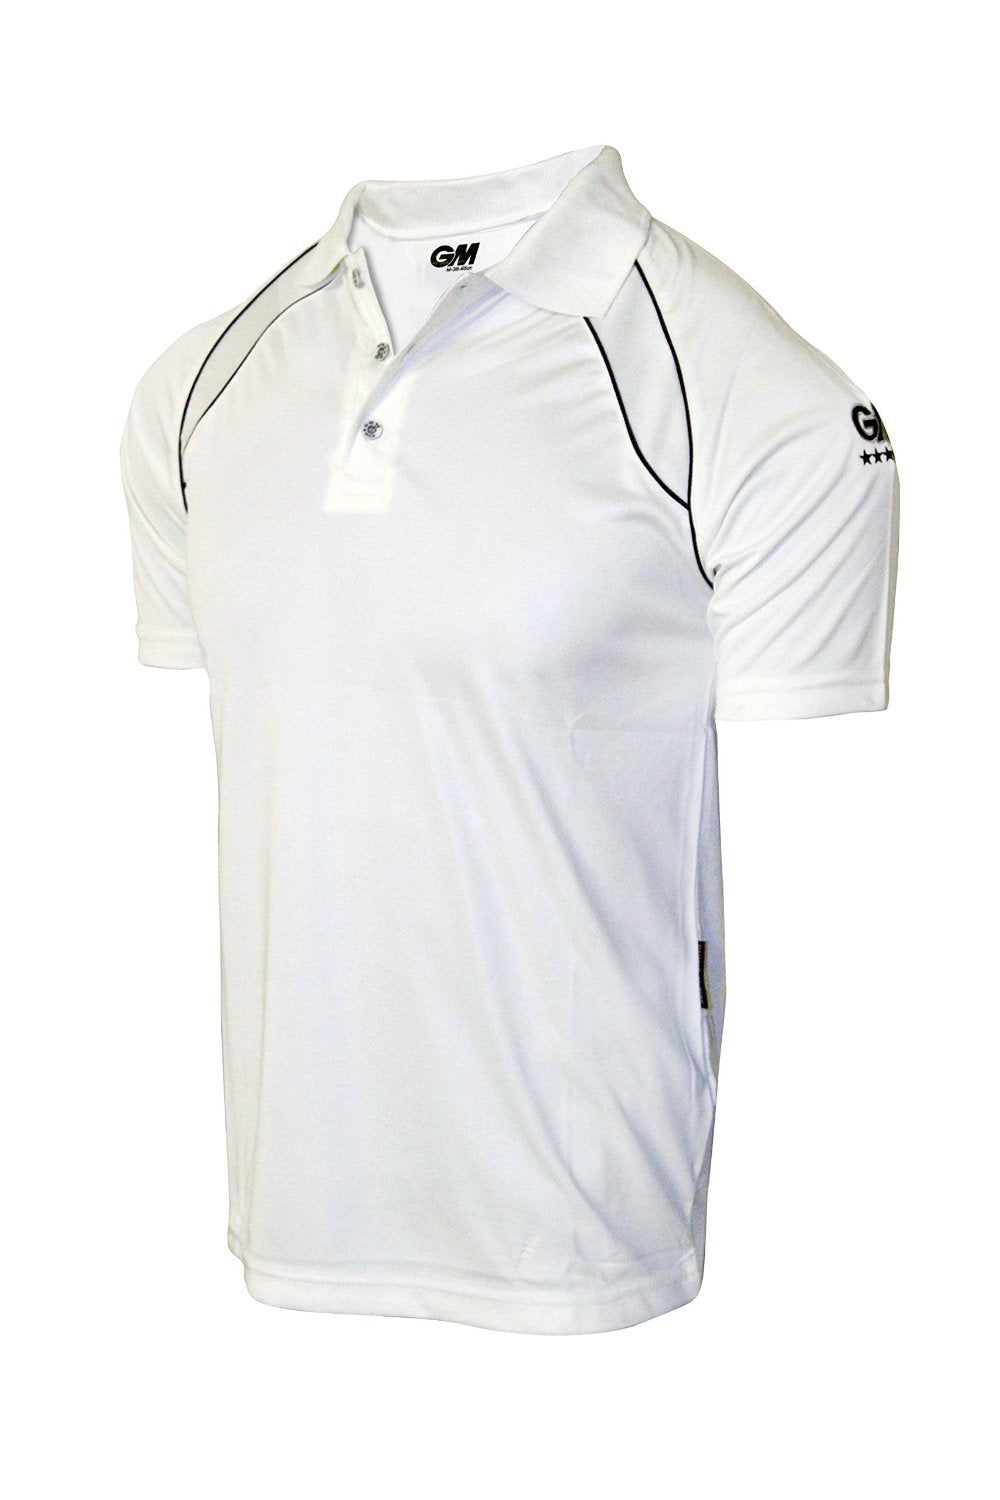 GM 7205 Half Sleeve Cricket T-Shirt (White/Navy) - Best Price online Prokicksports.com